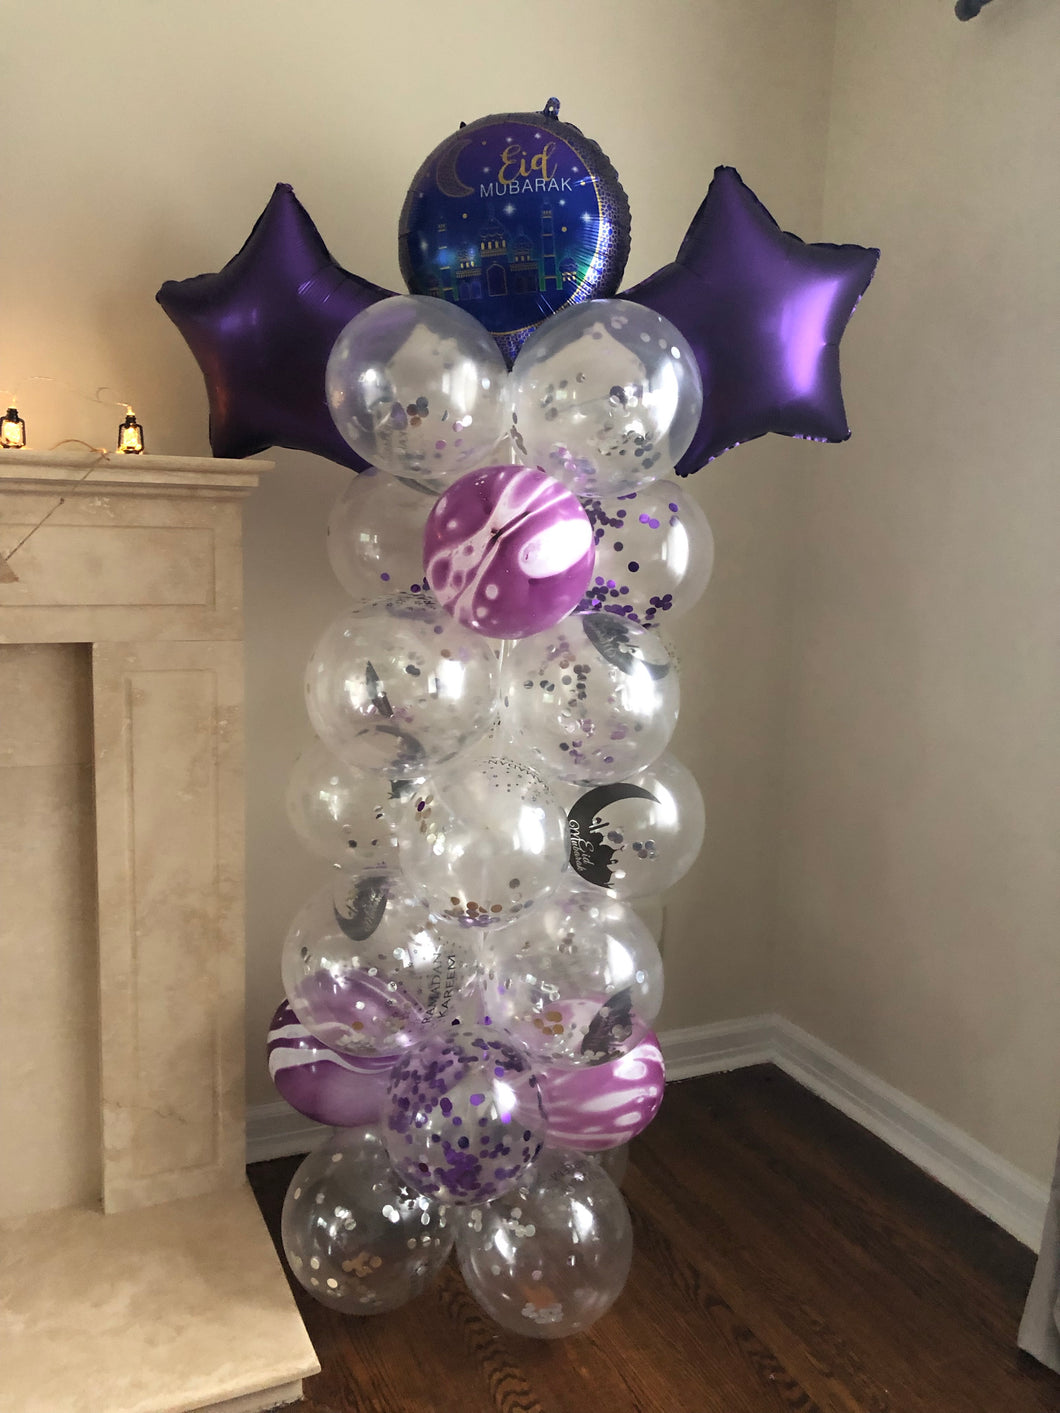 Eid Balloon Column Transparent Confetti/Magenta DIY